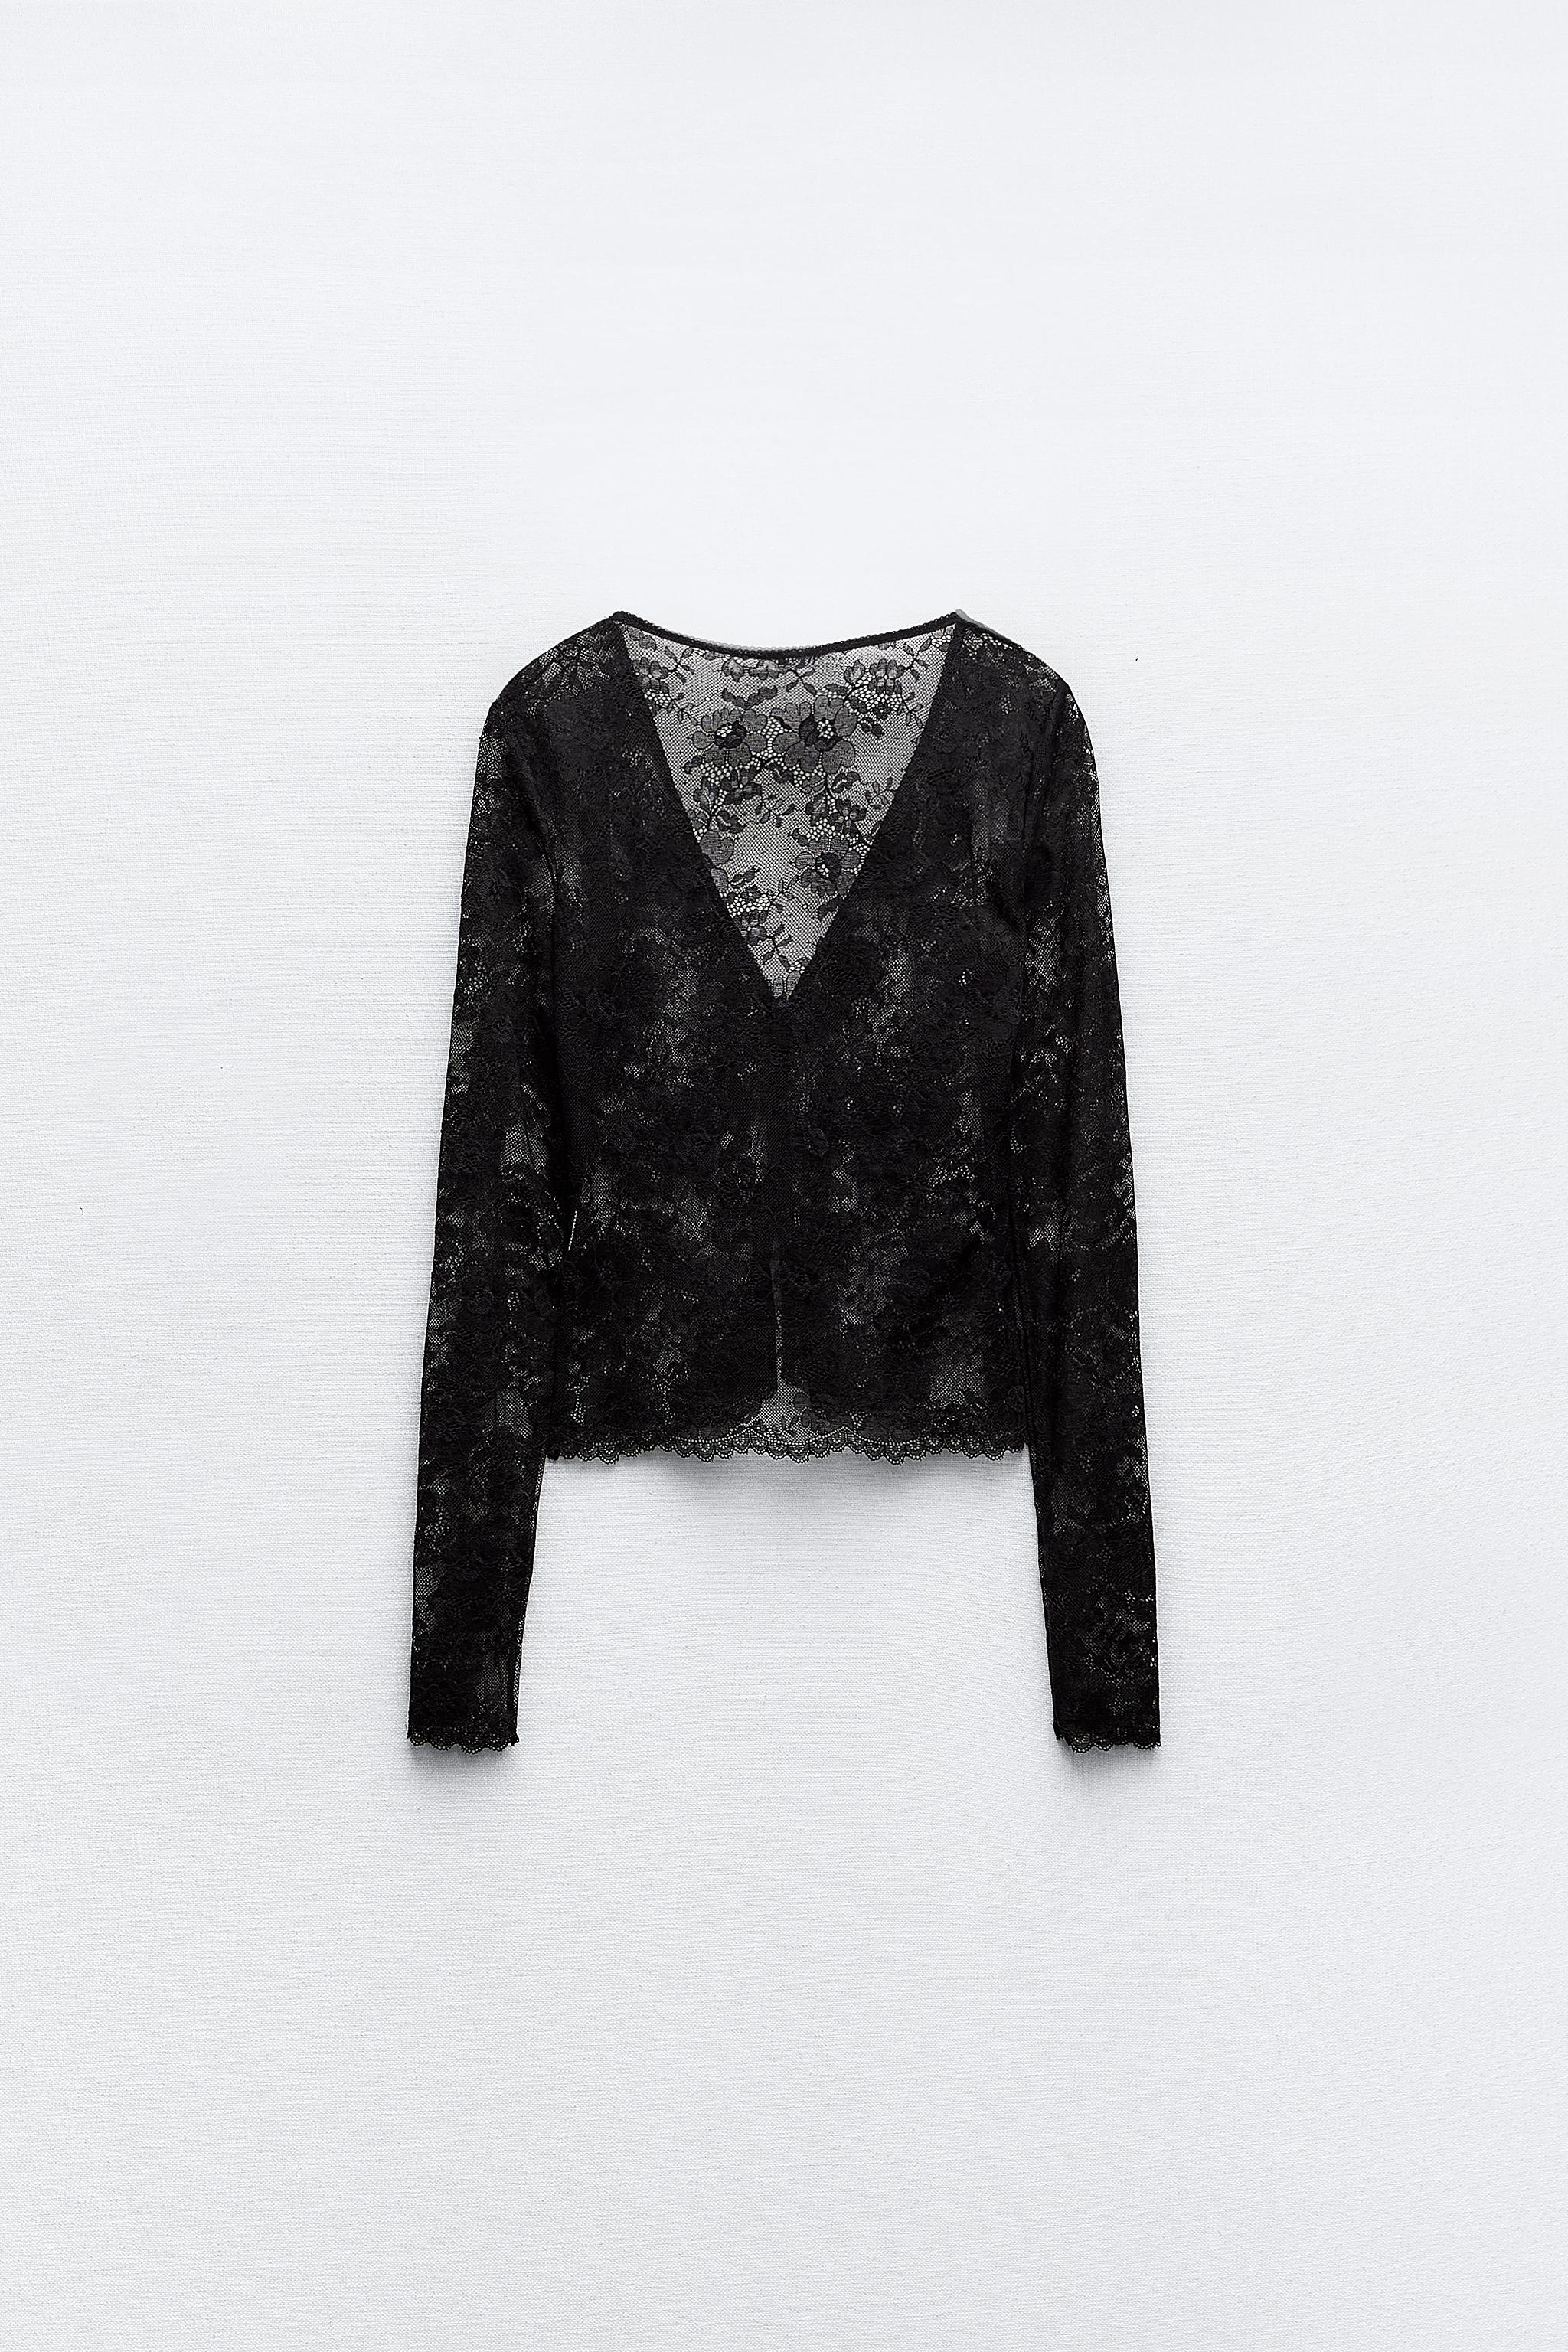 Zara, Tops, Nwt Zara Blogger Favorite Black Lace Crop Top